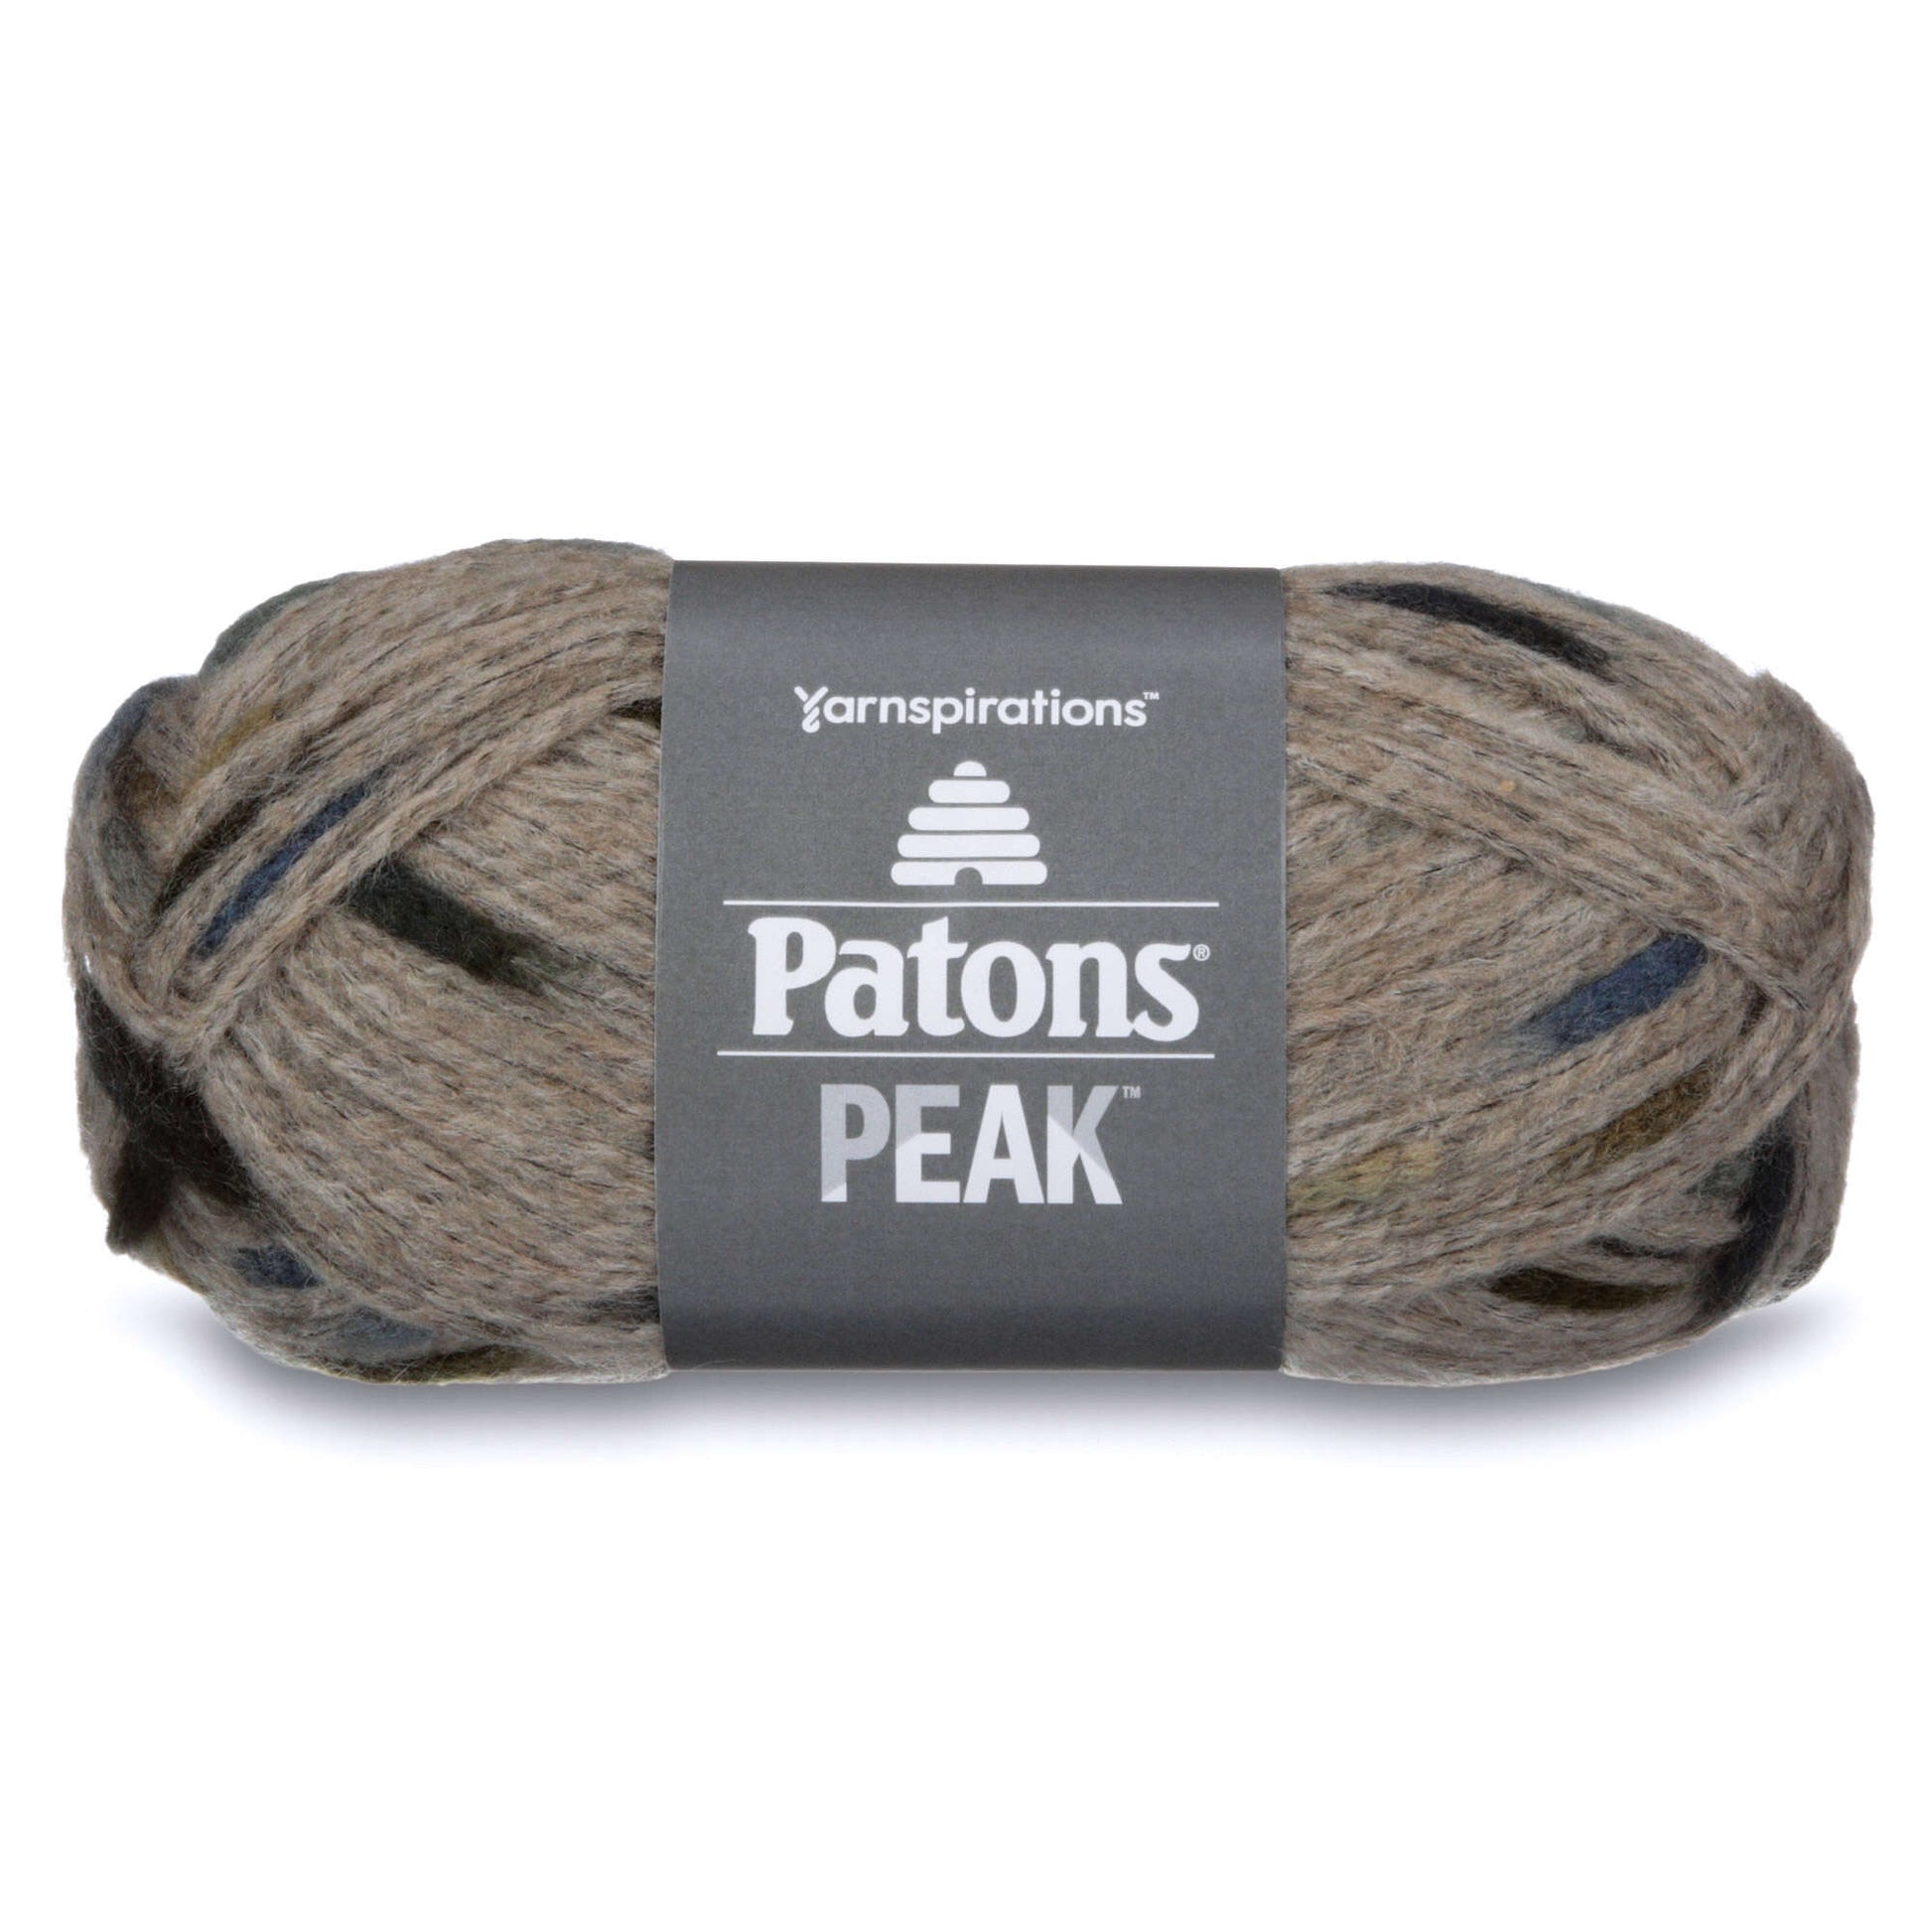 Patons Peak Yarn - Discontinued